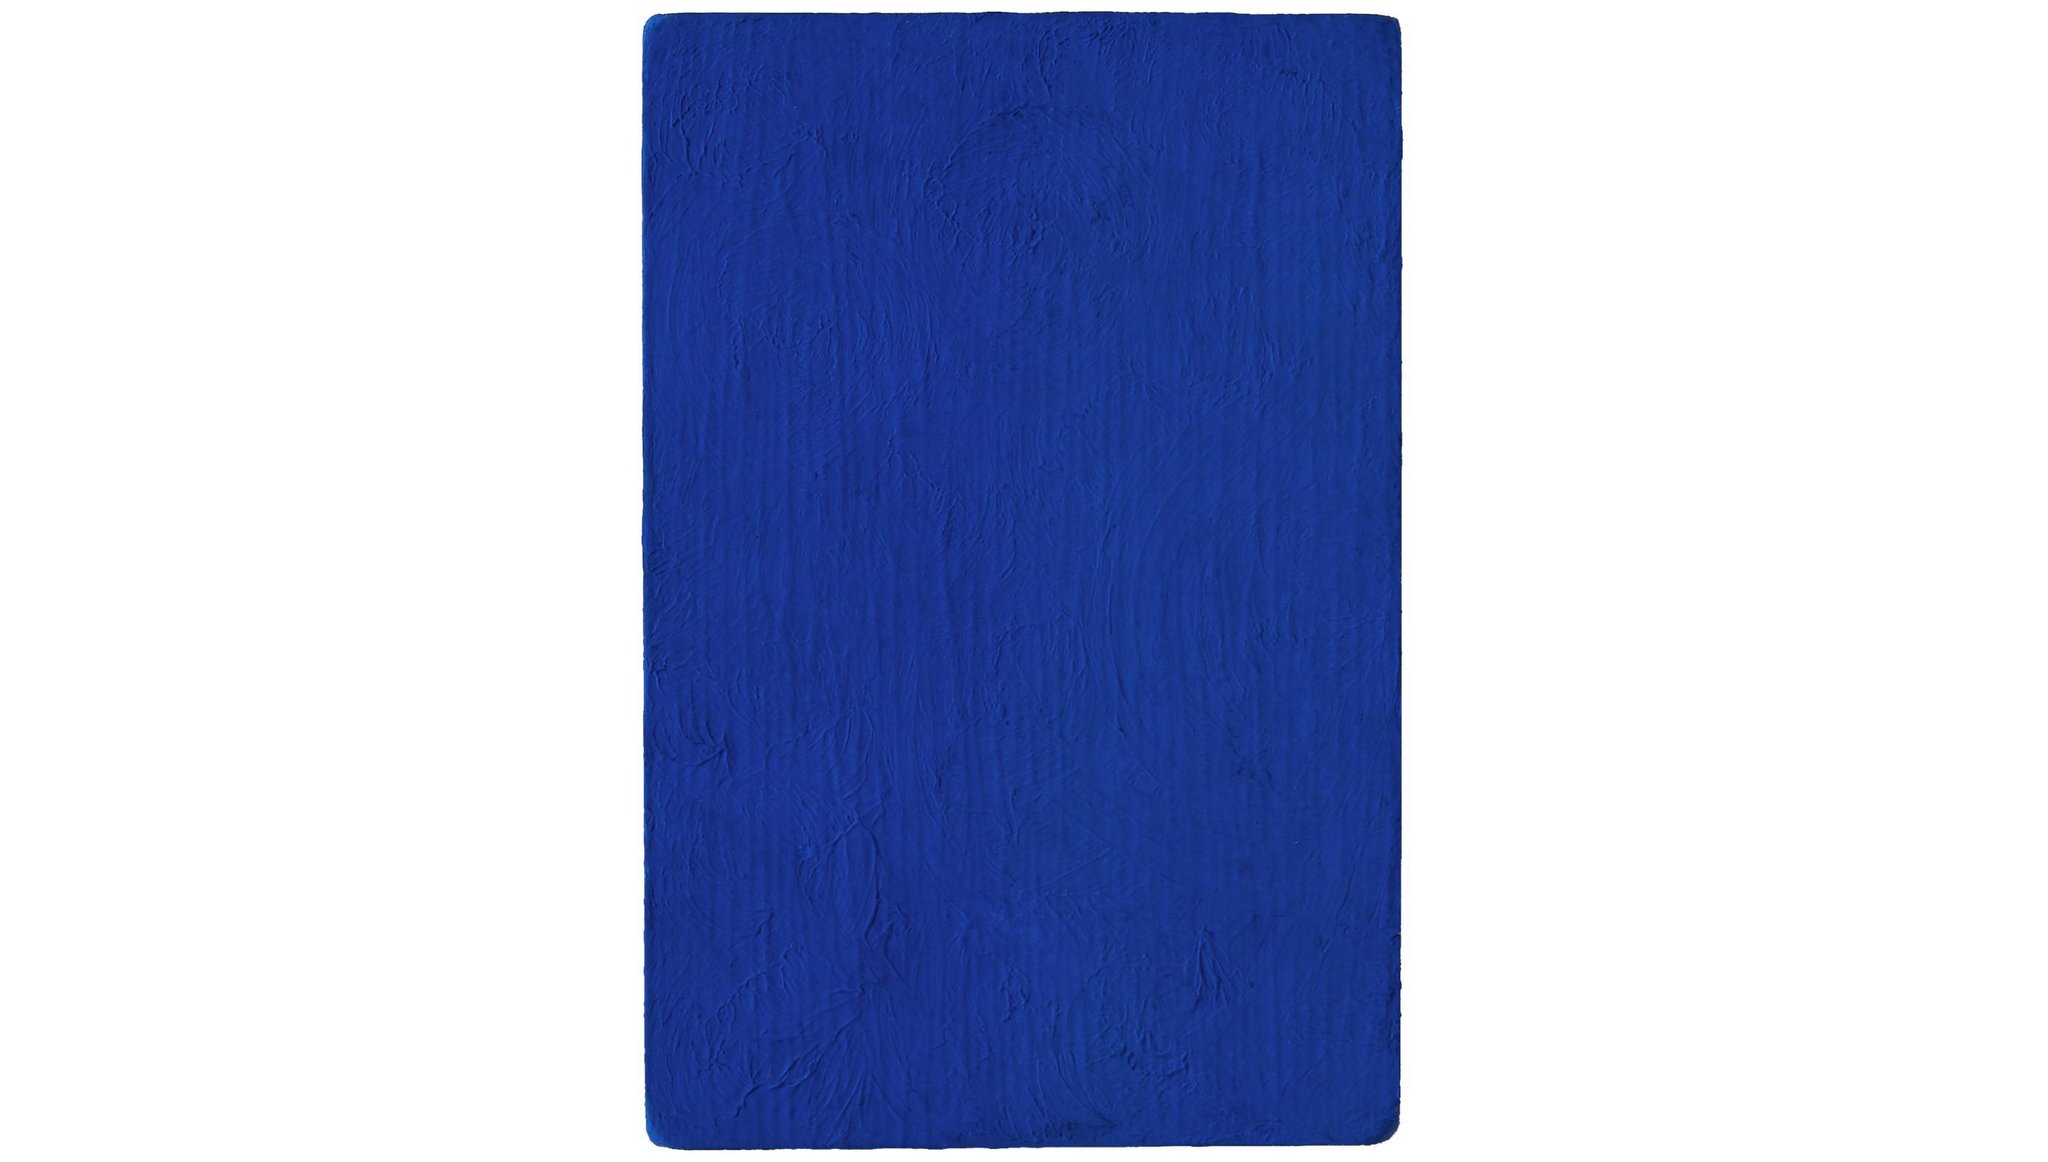 Un Monocromo blu (IKB 98) del 1957 (courtesy of Succession Yves Klein c/o ADAGP Paris)